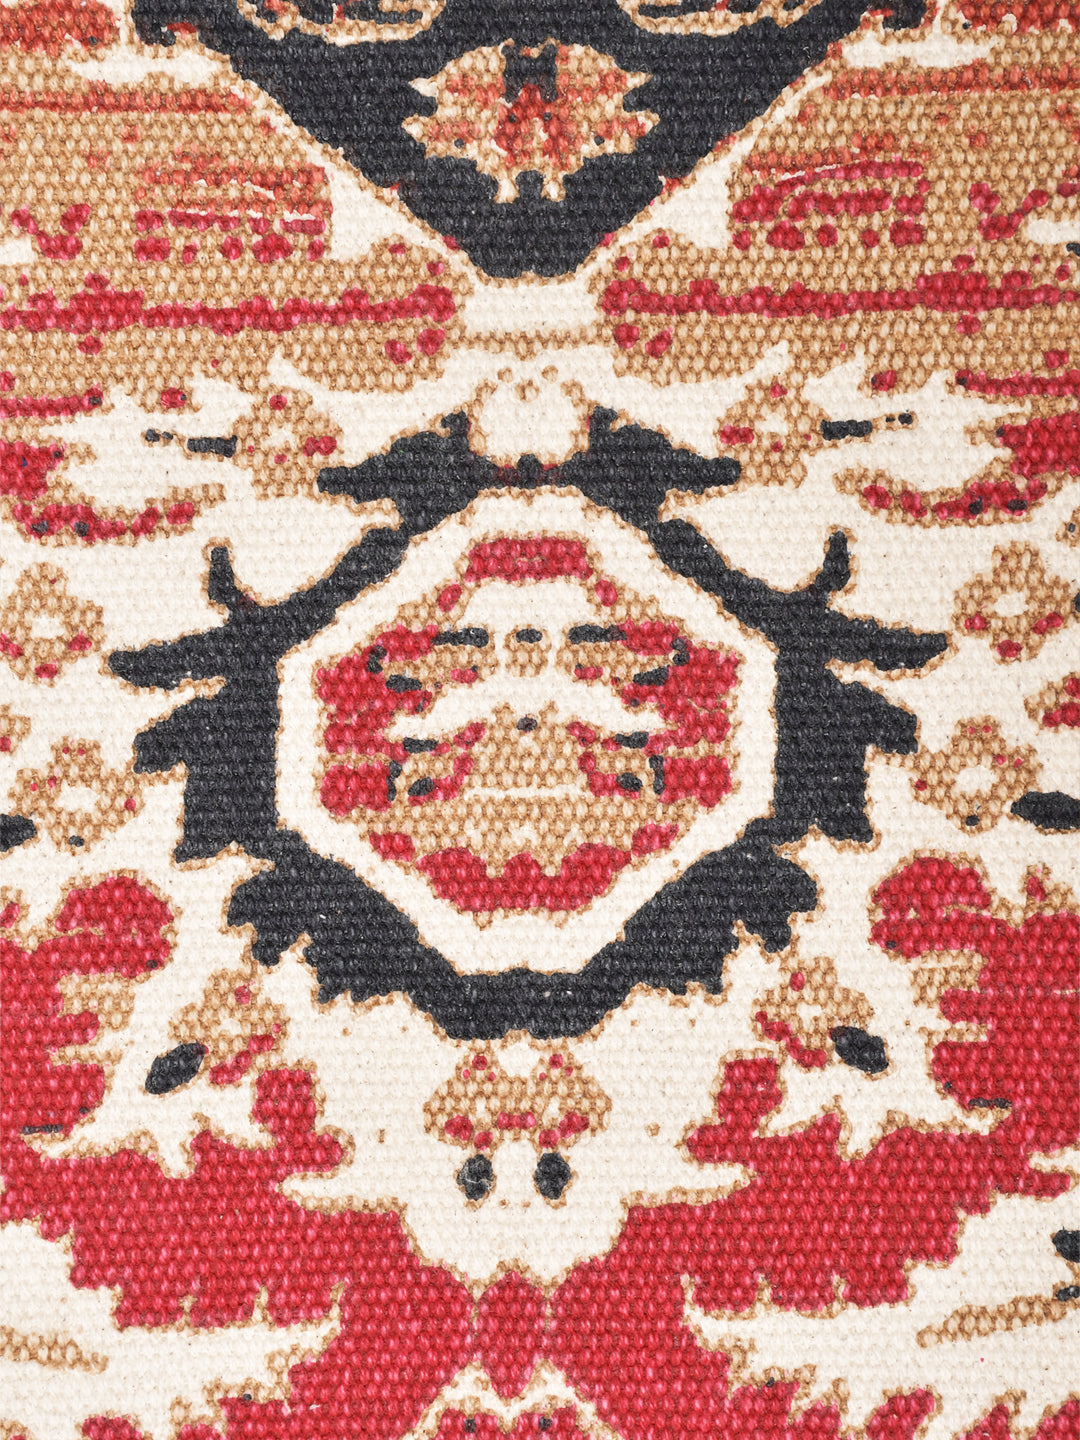 Jodhpur Rusty Red 4'x5.5' Printed Cotton Carpet